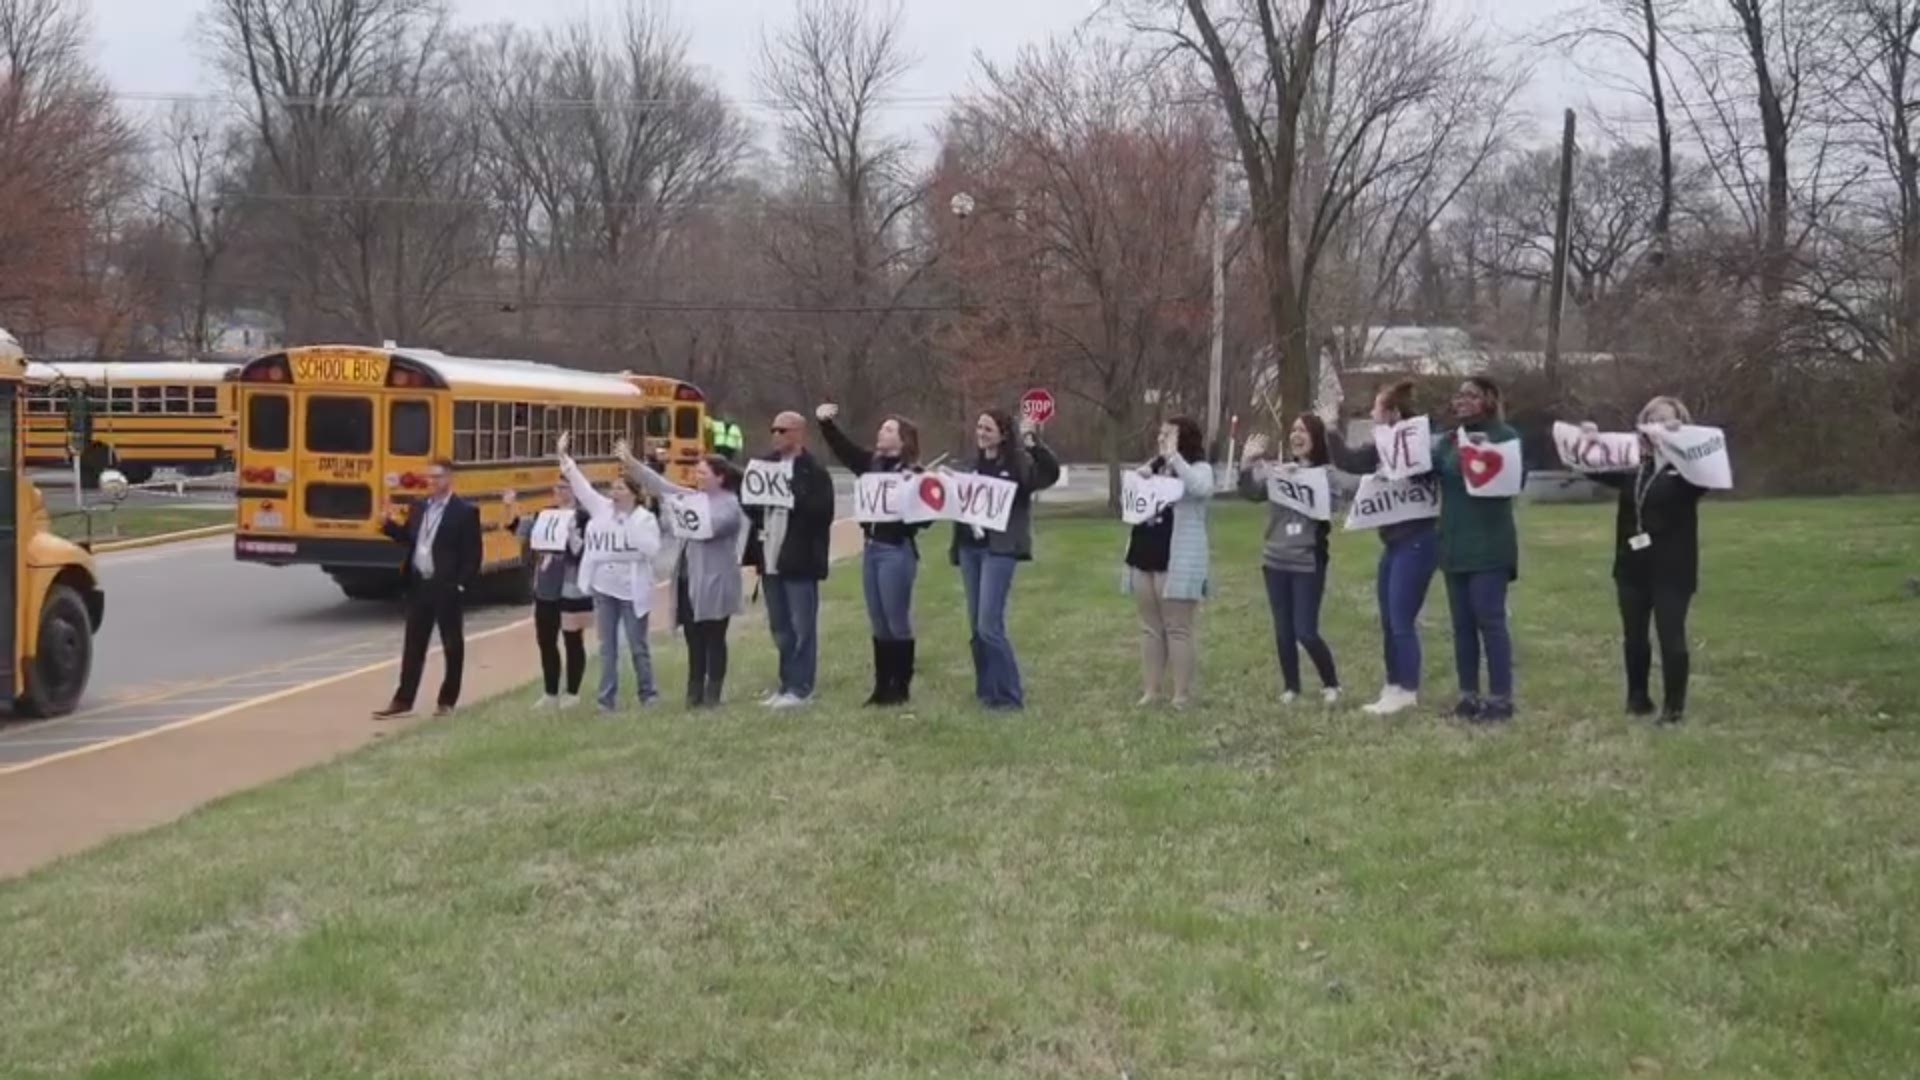 Teachers held up signs as buses left for an extended break